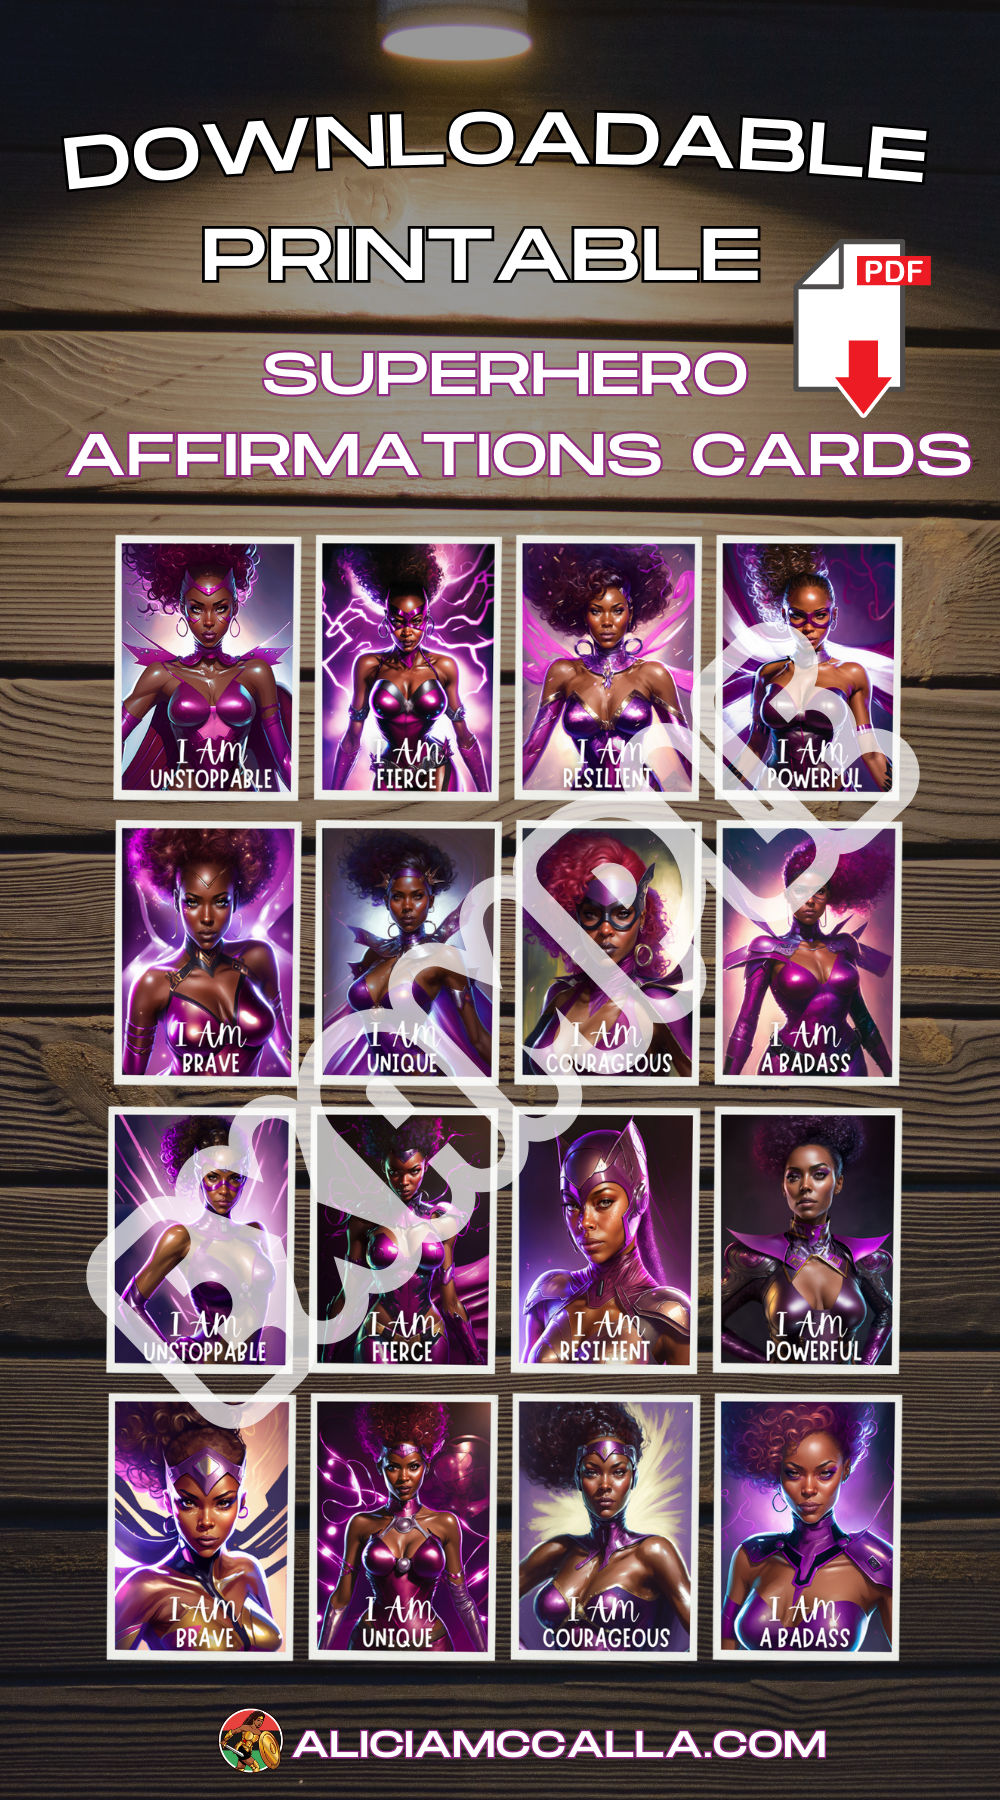 Downloadable Printable Superhero Affirmations Cards Features Black Women